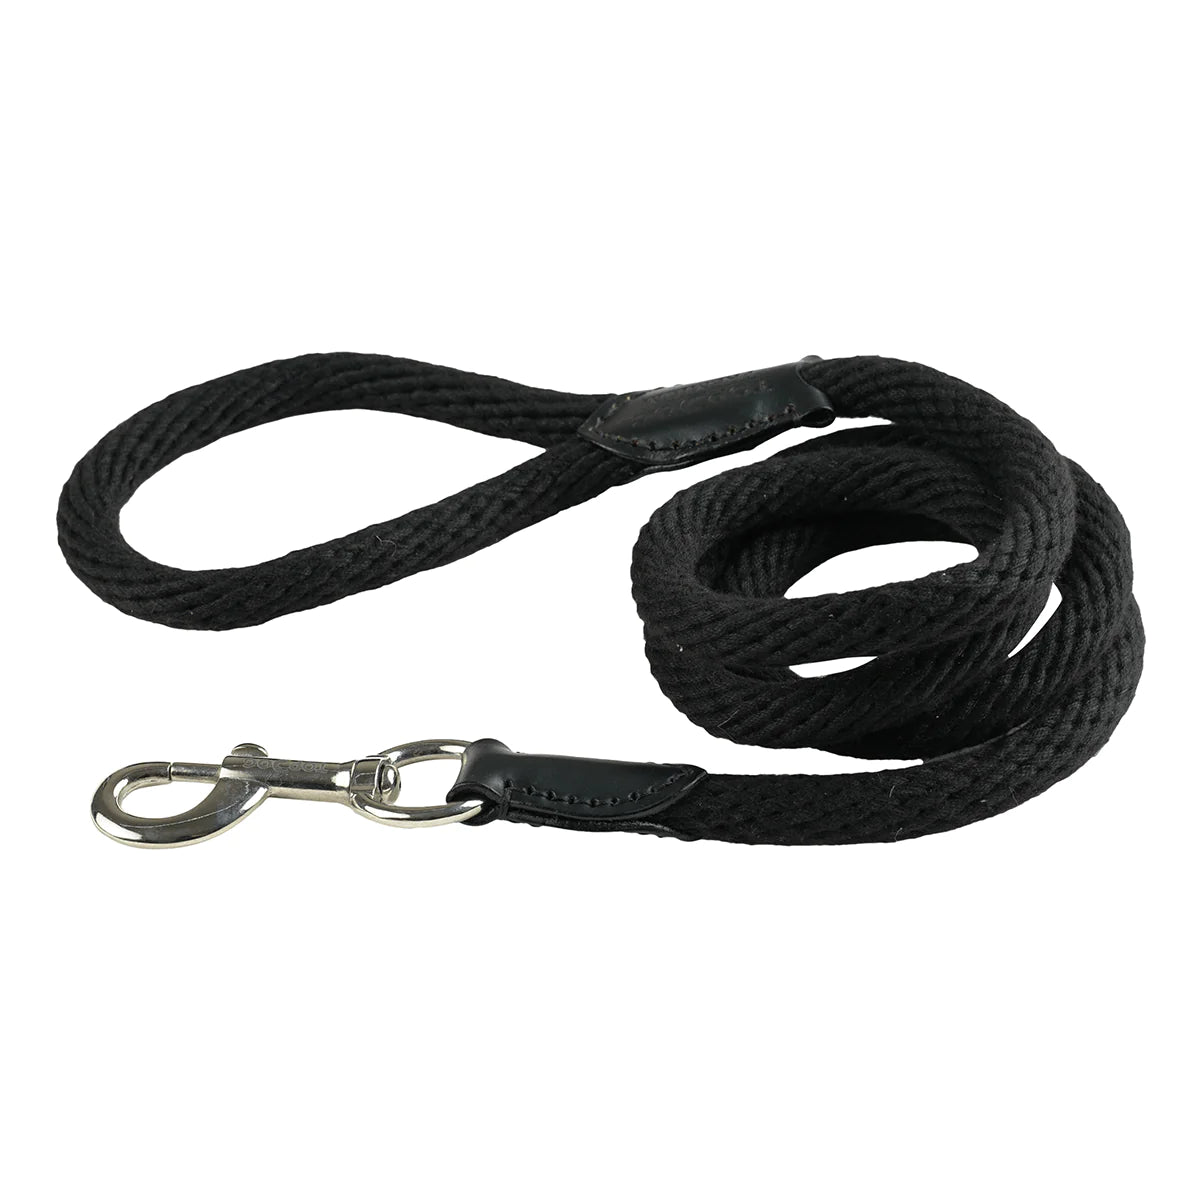 TOPDOG PREMIUM Cotton Rope Leash - Black, Large